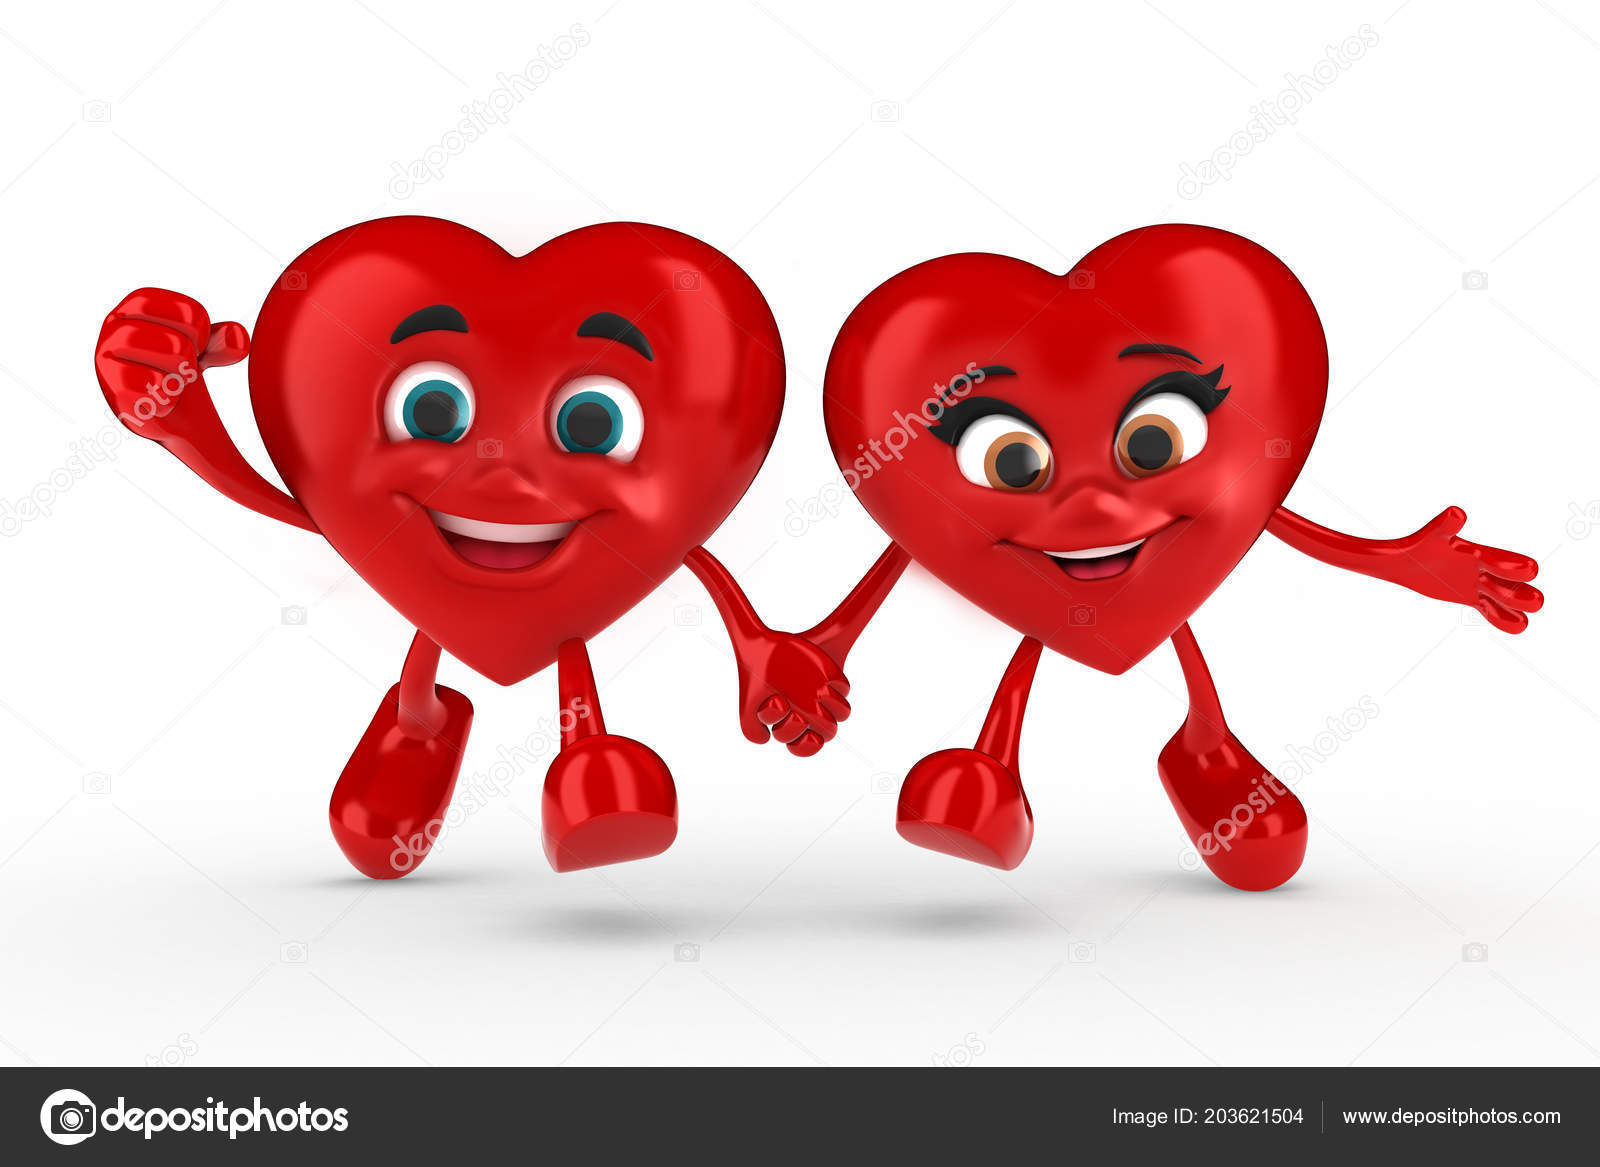 https://st4.depositphotos.com/3842881/20362/i/1600/depositphotos_203621504-stock-illustration-render-happy-hearts-holding-hands.jpg